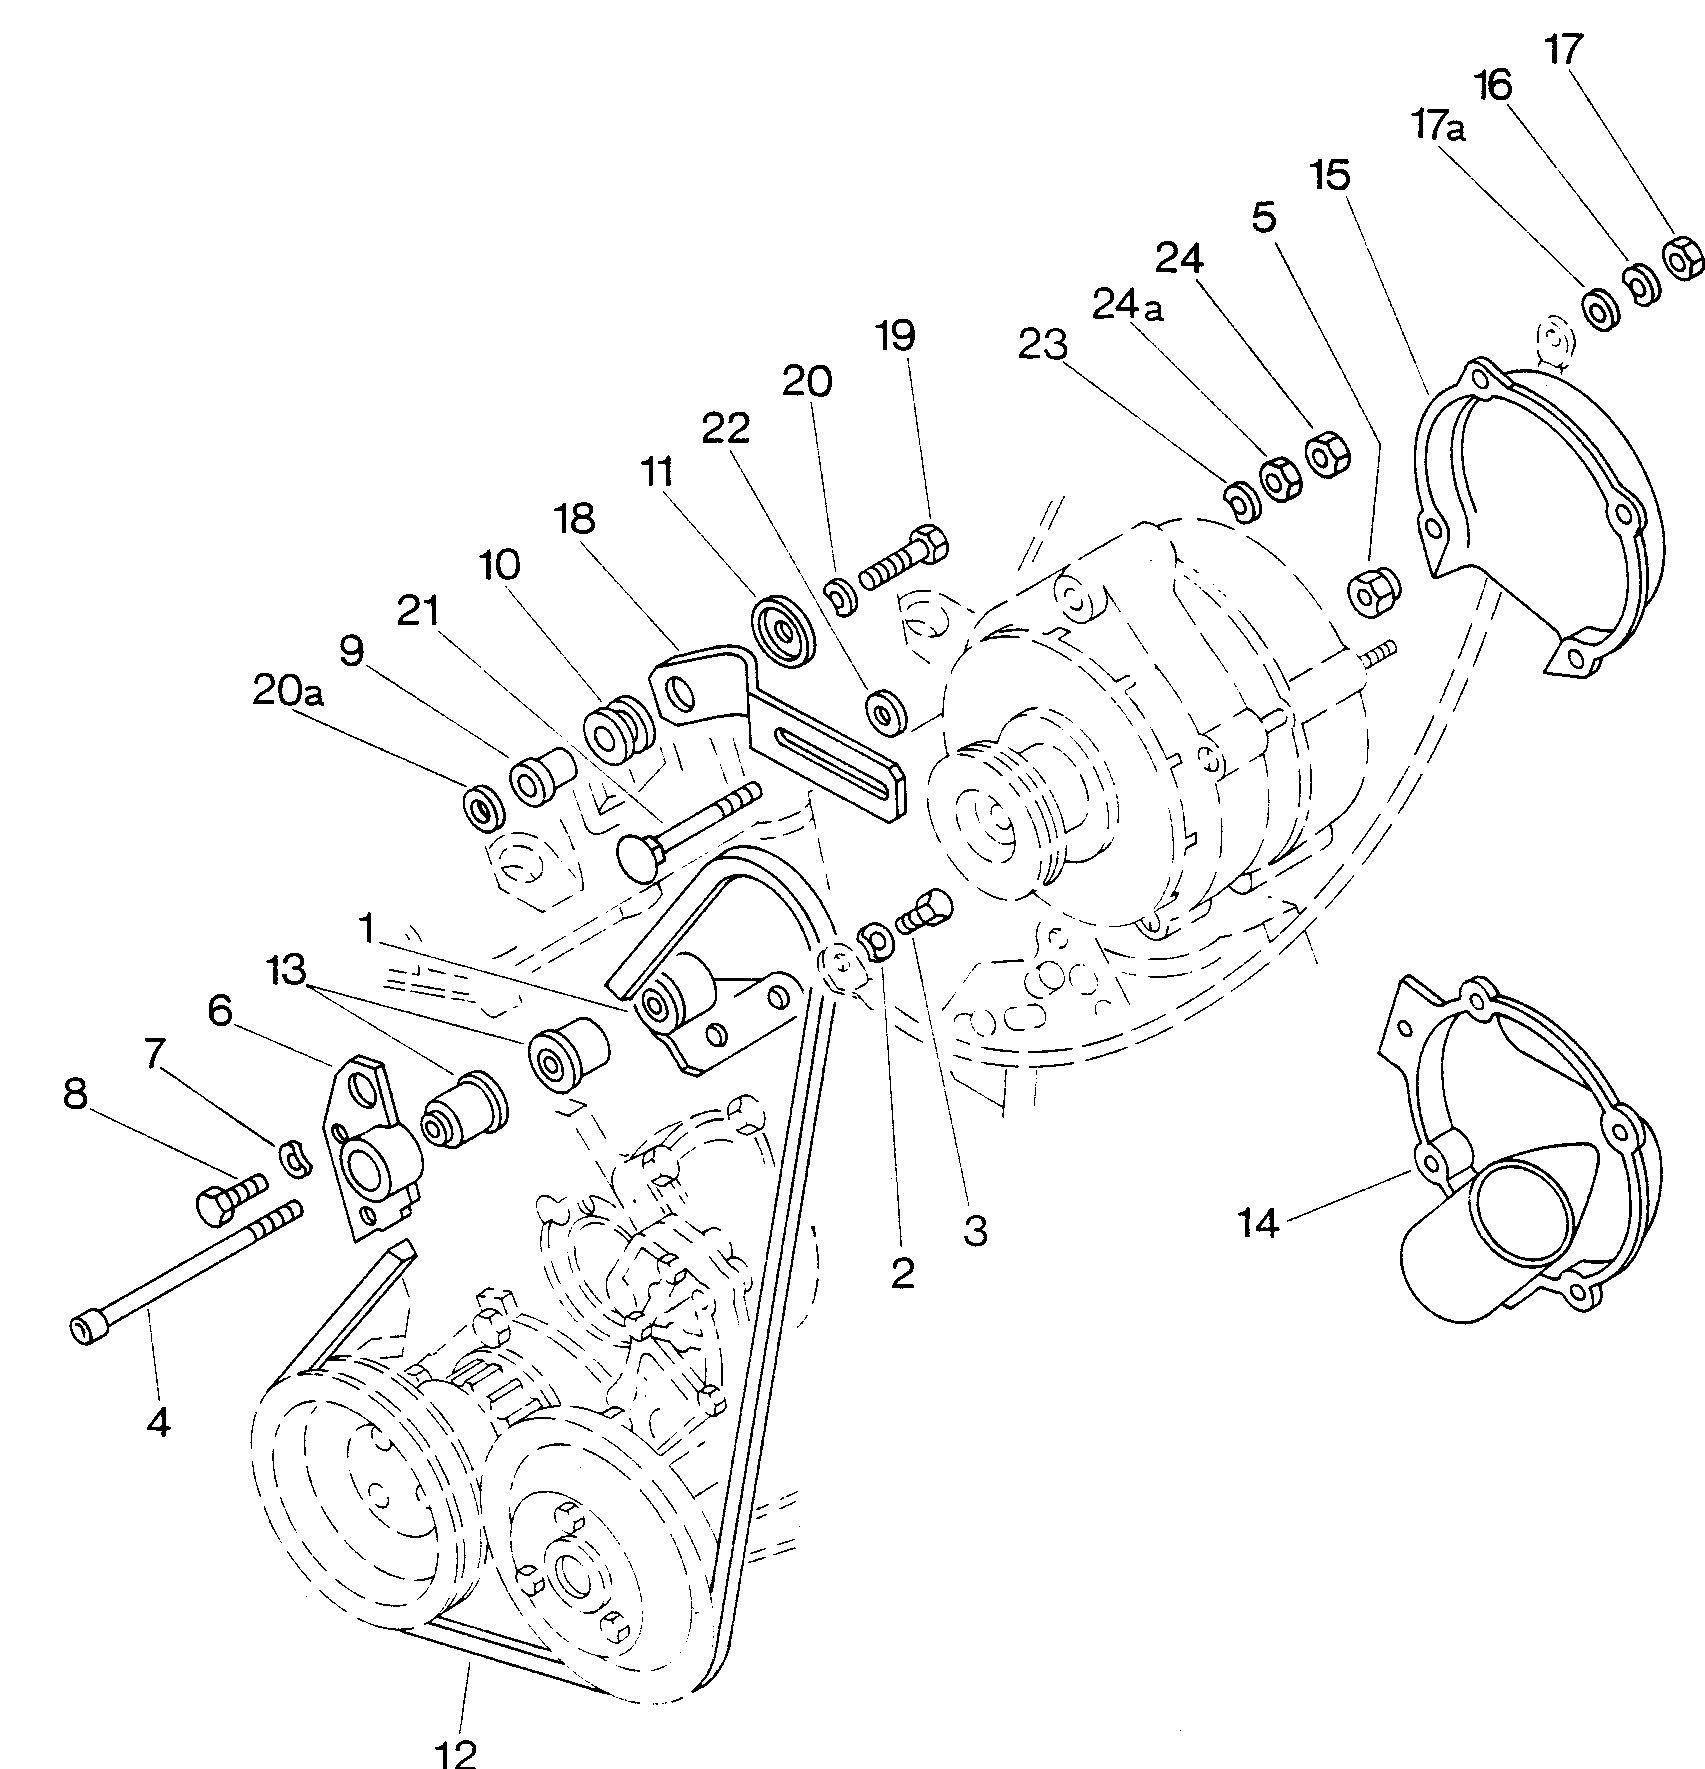 V kayışıAlternatör  - Mod.181 / Iltis - ilt